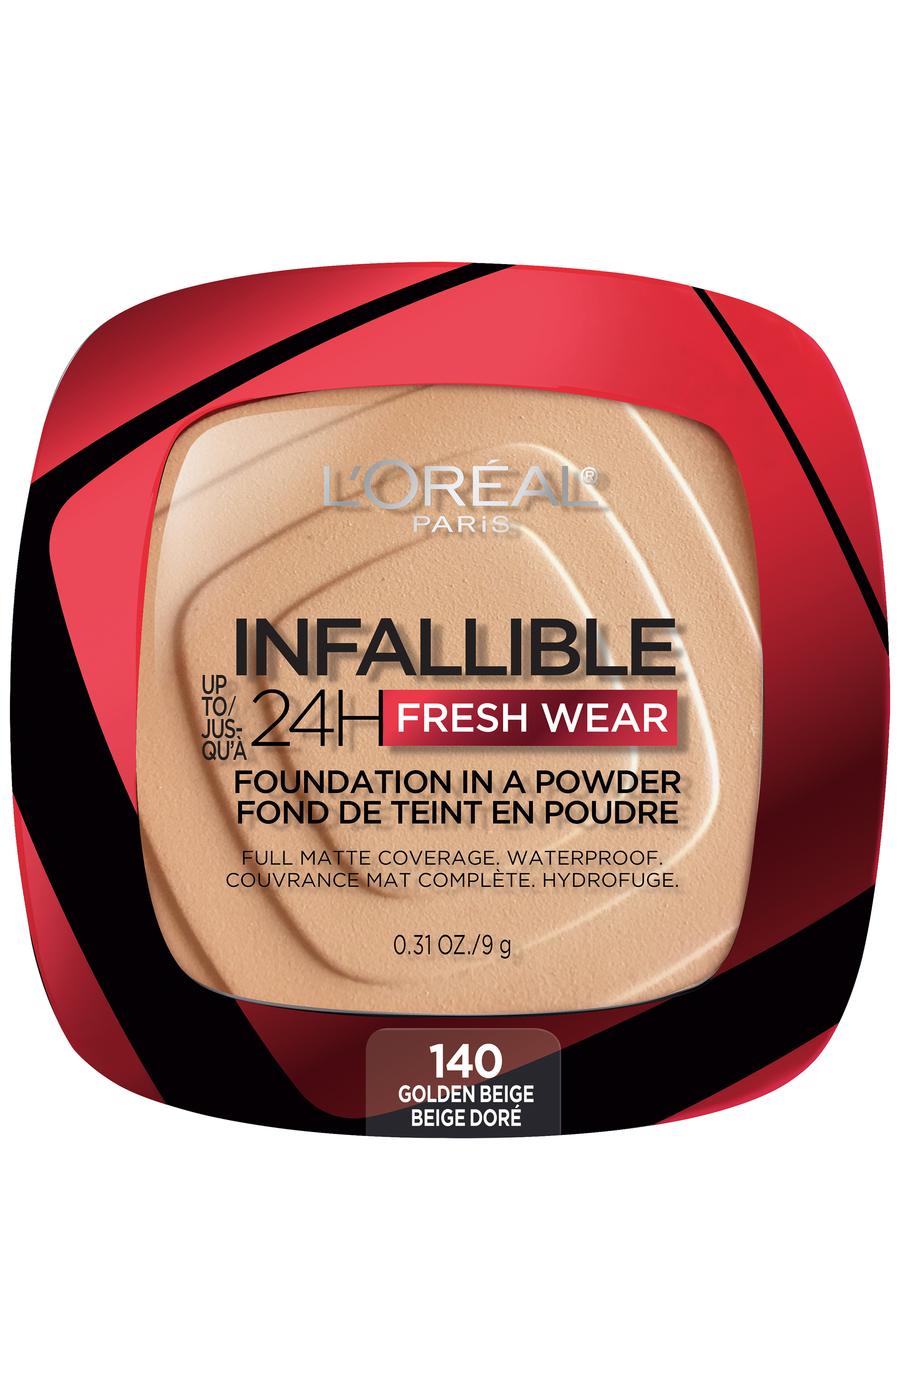 L'Oréal Paris Infallible Up to 24H Fresh Wear Foundation in a Powder Golden  Beige - Shop Powder at H-E-B